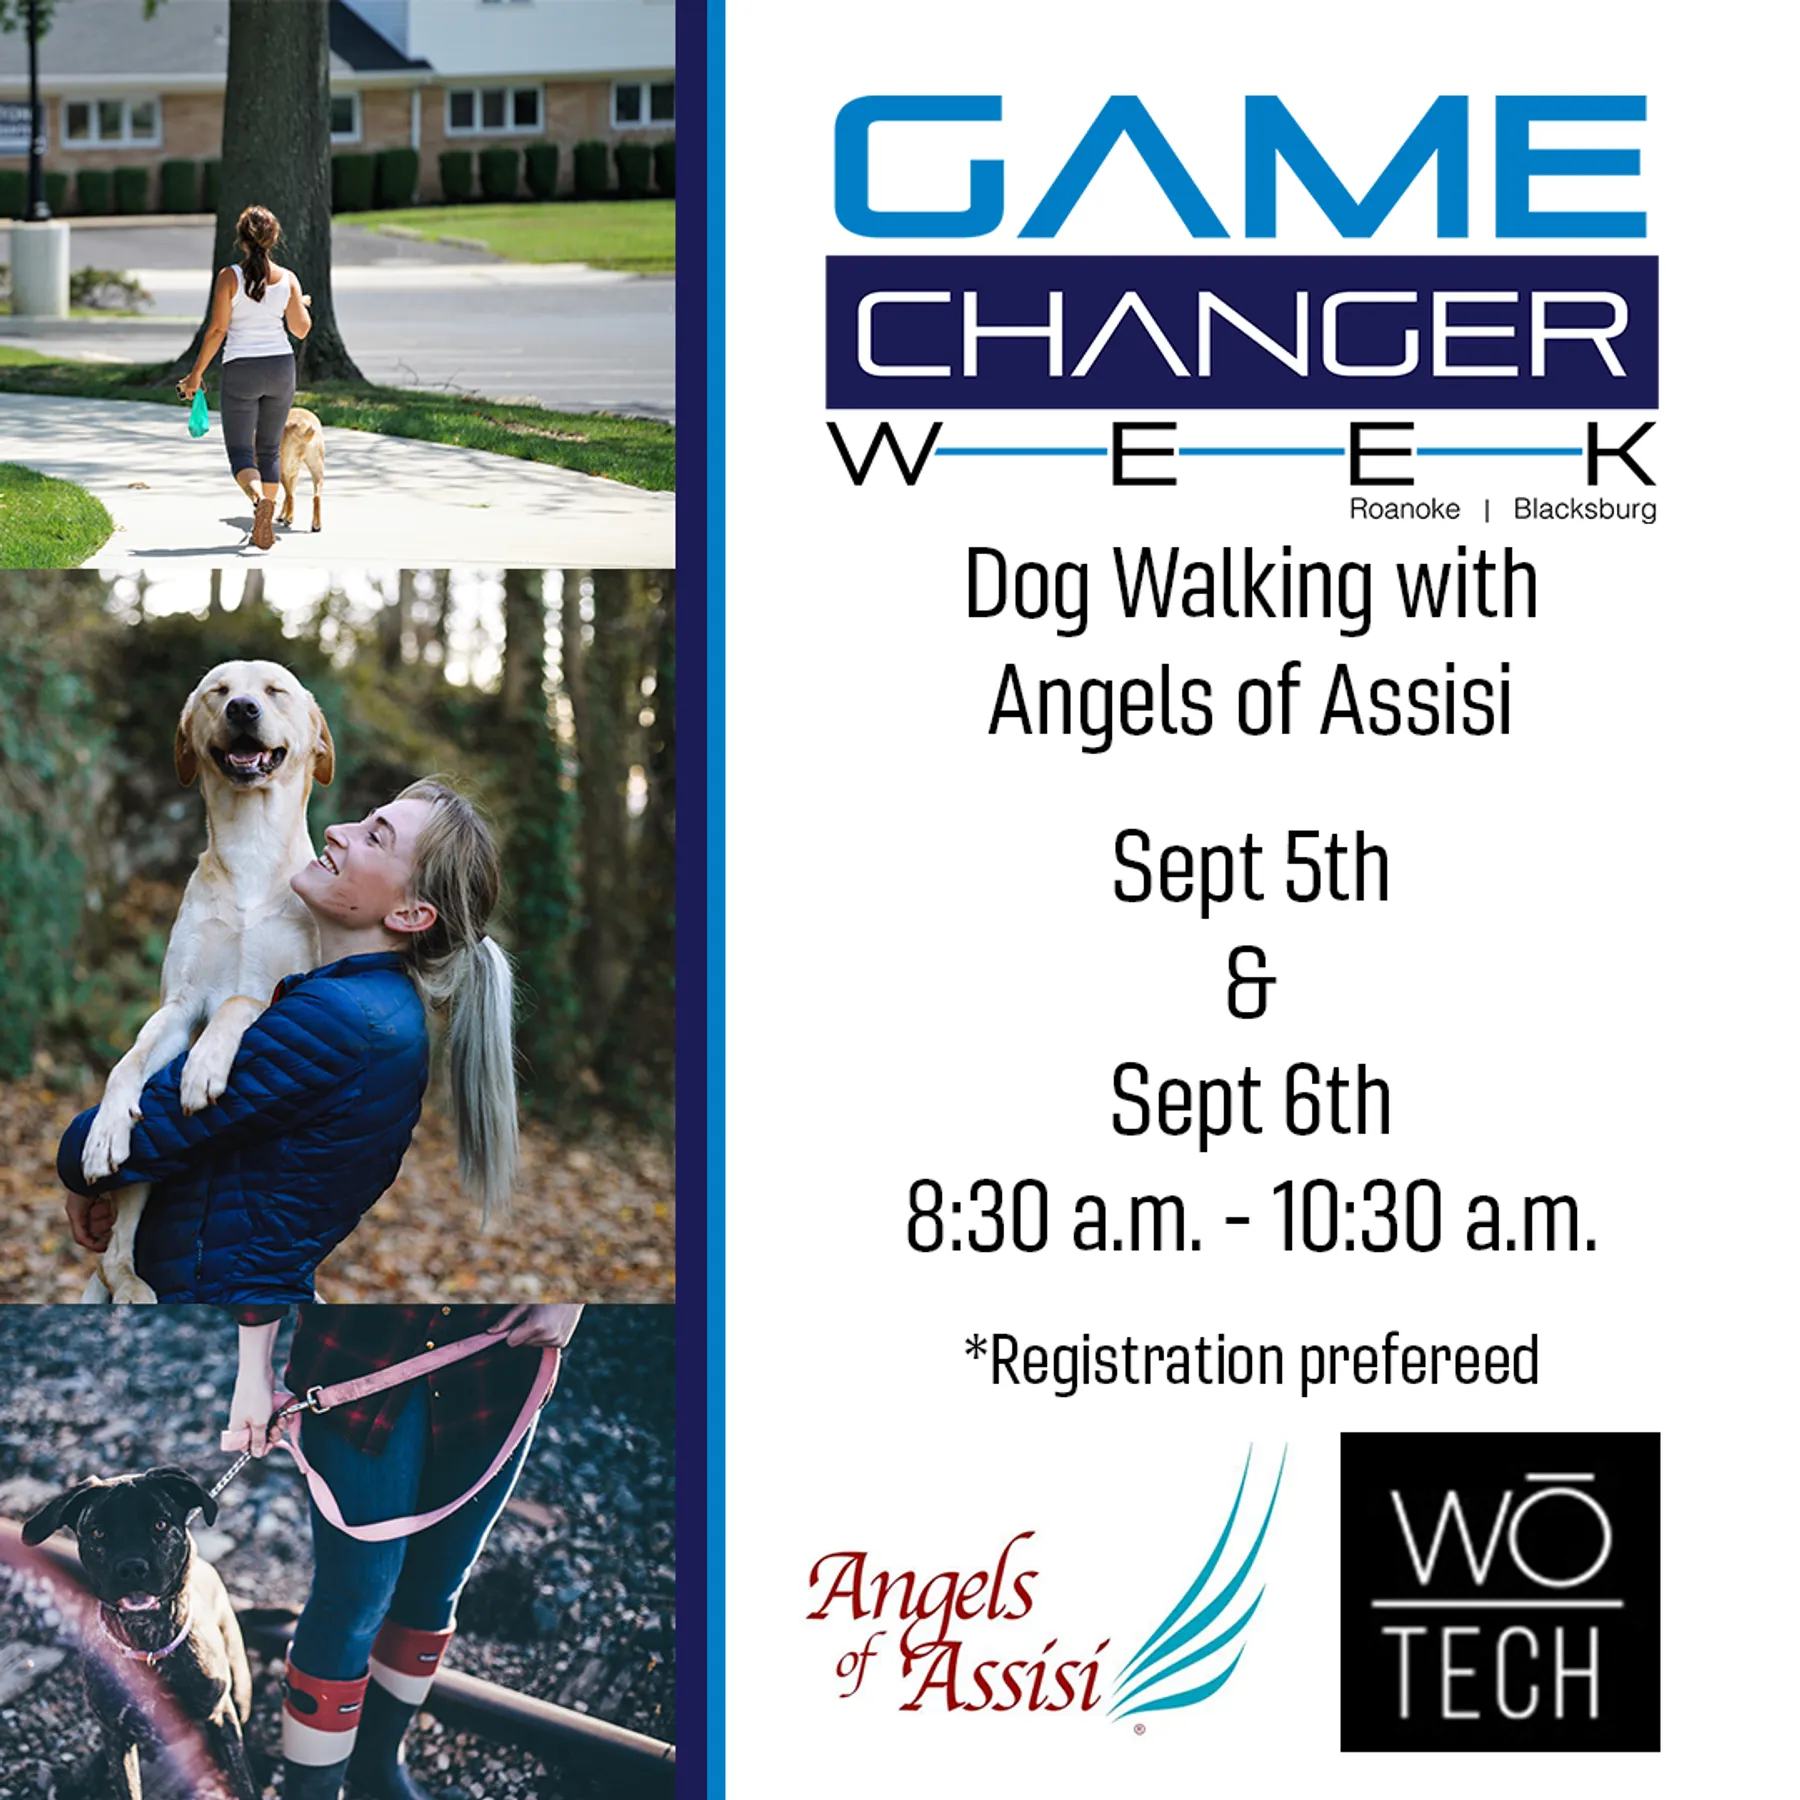 Dog Walking at Angels of Assisi as part of GameChanger Week